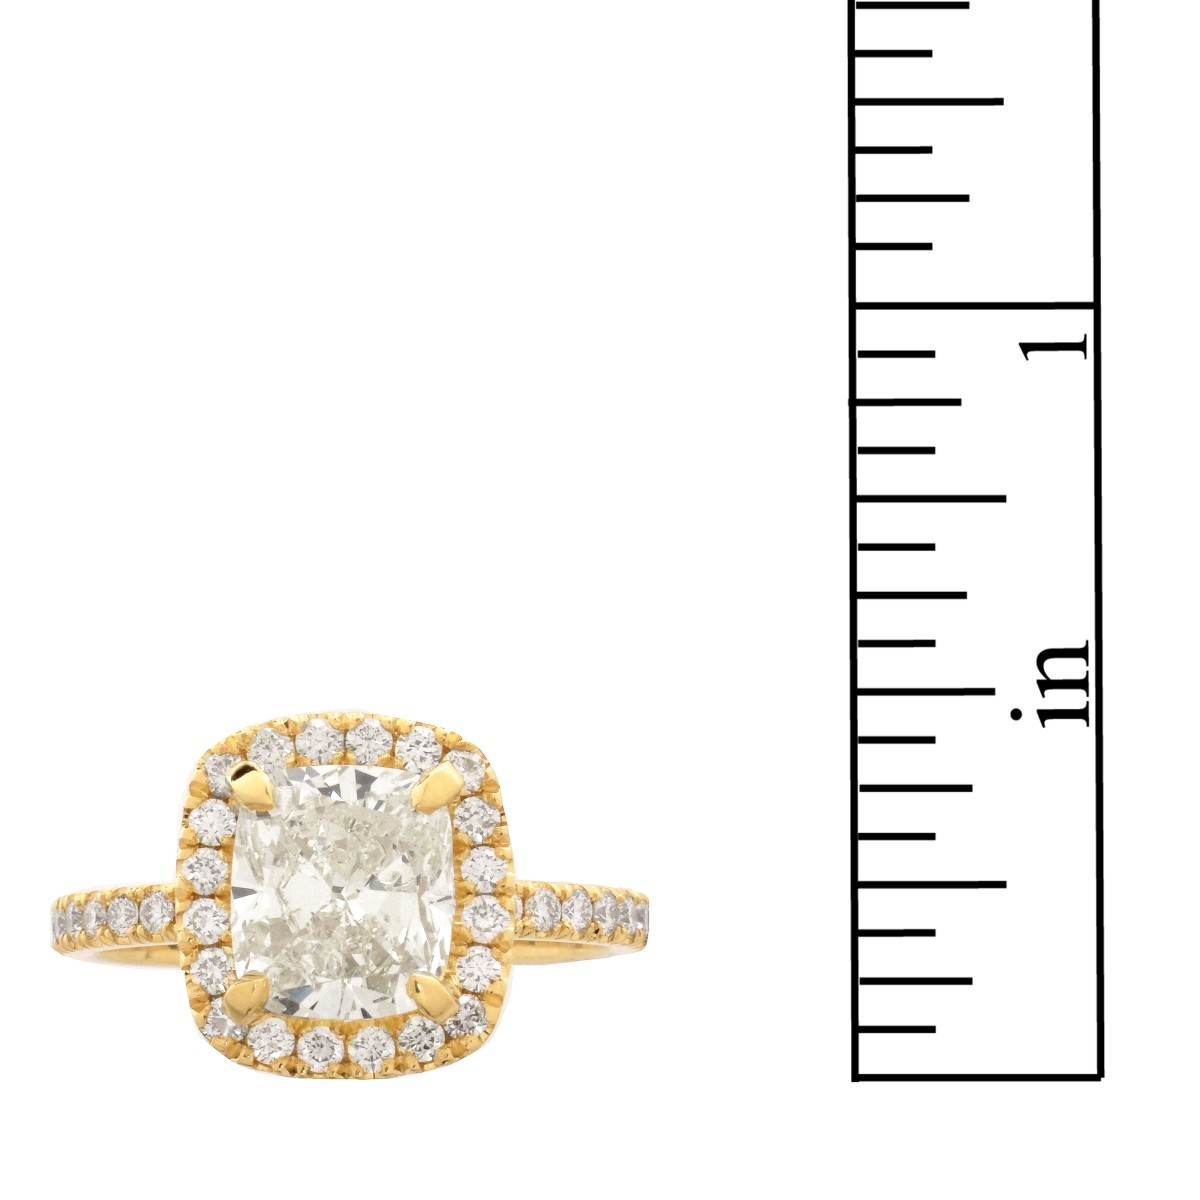 IGL Diamond and 18K Engagement Ring